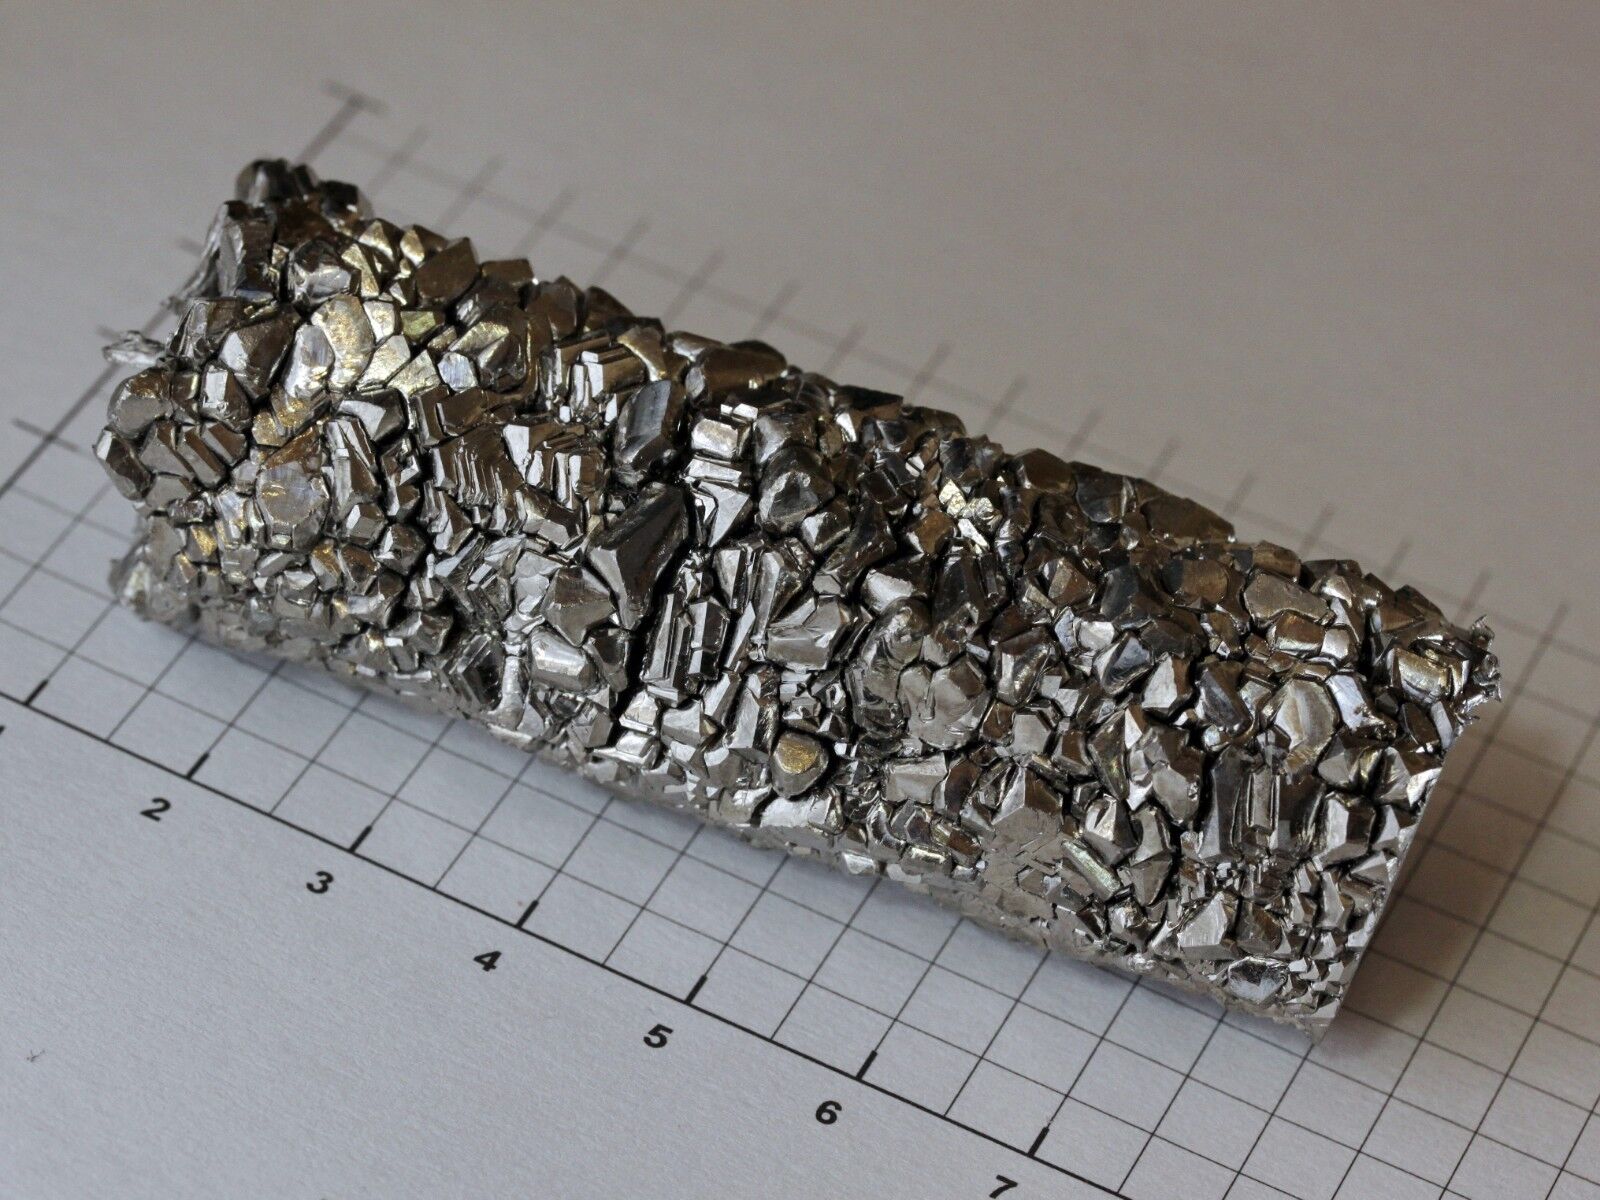 Sensational Titanium crystal bar - absolutely rare 136.43g 